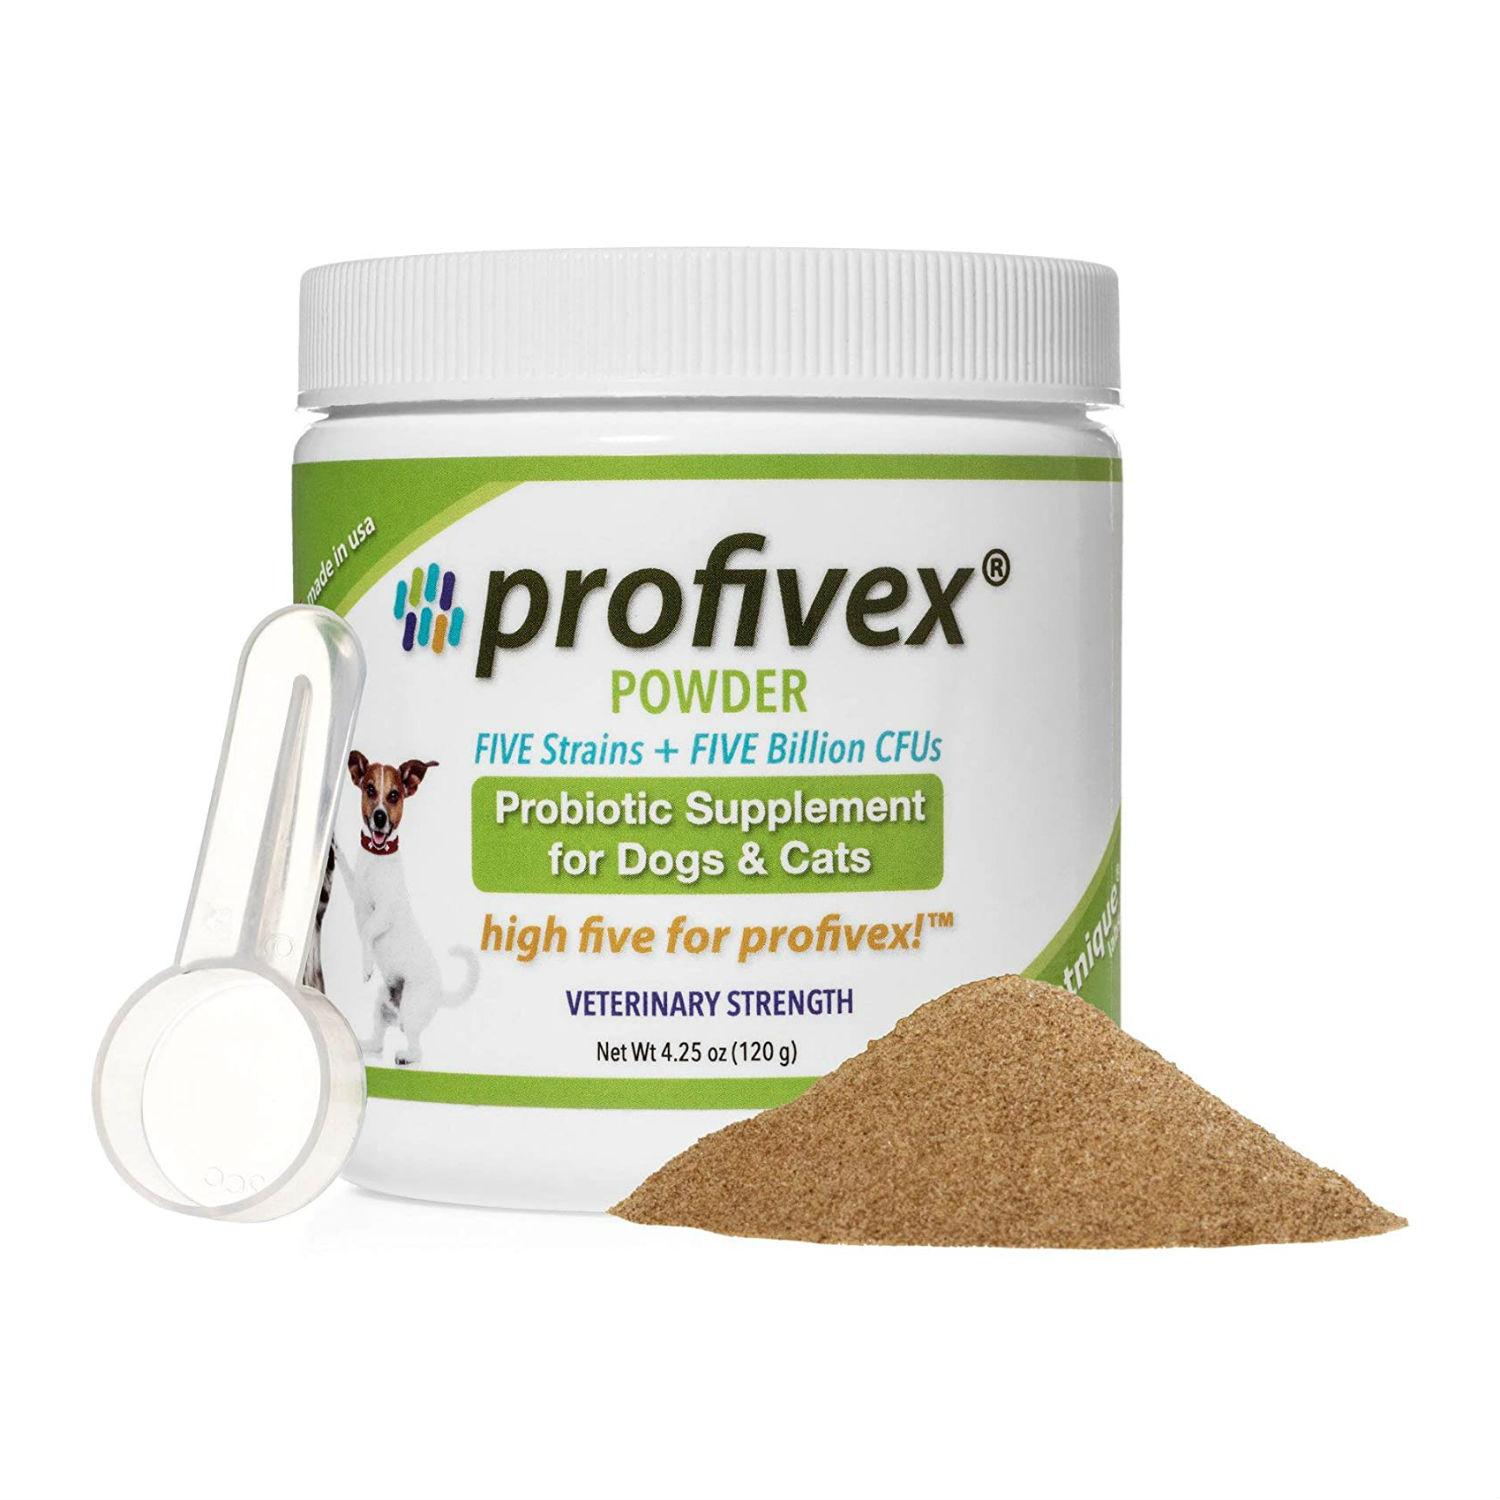 Vetnique Profivex Probiotic Supplement for Dogs and Cats- Liver Powder